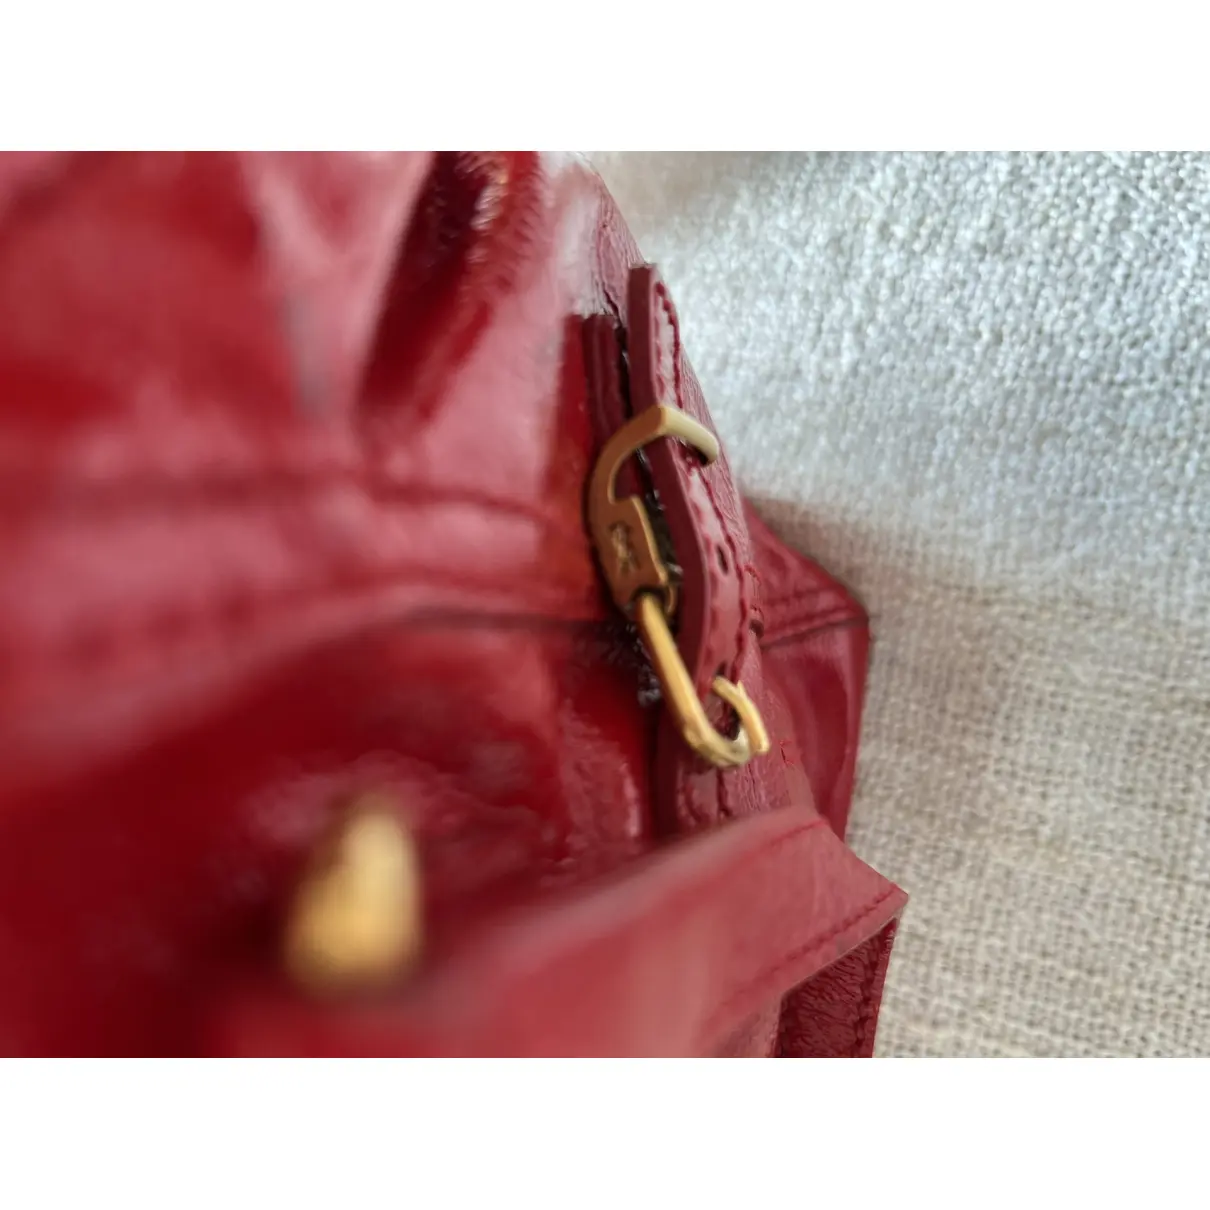 Downtown patent leather handbag Yves Saint Laurent